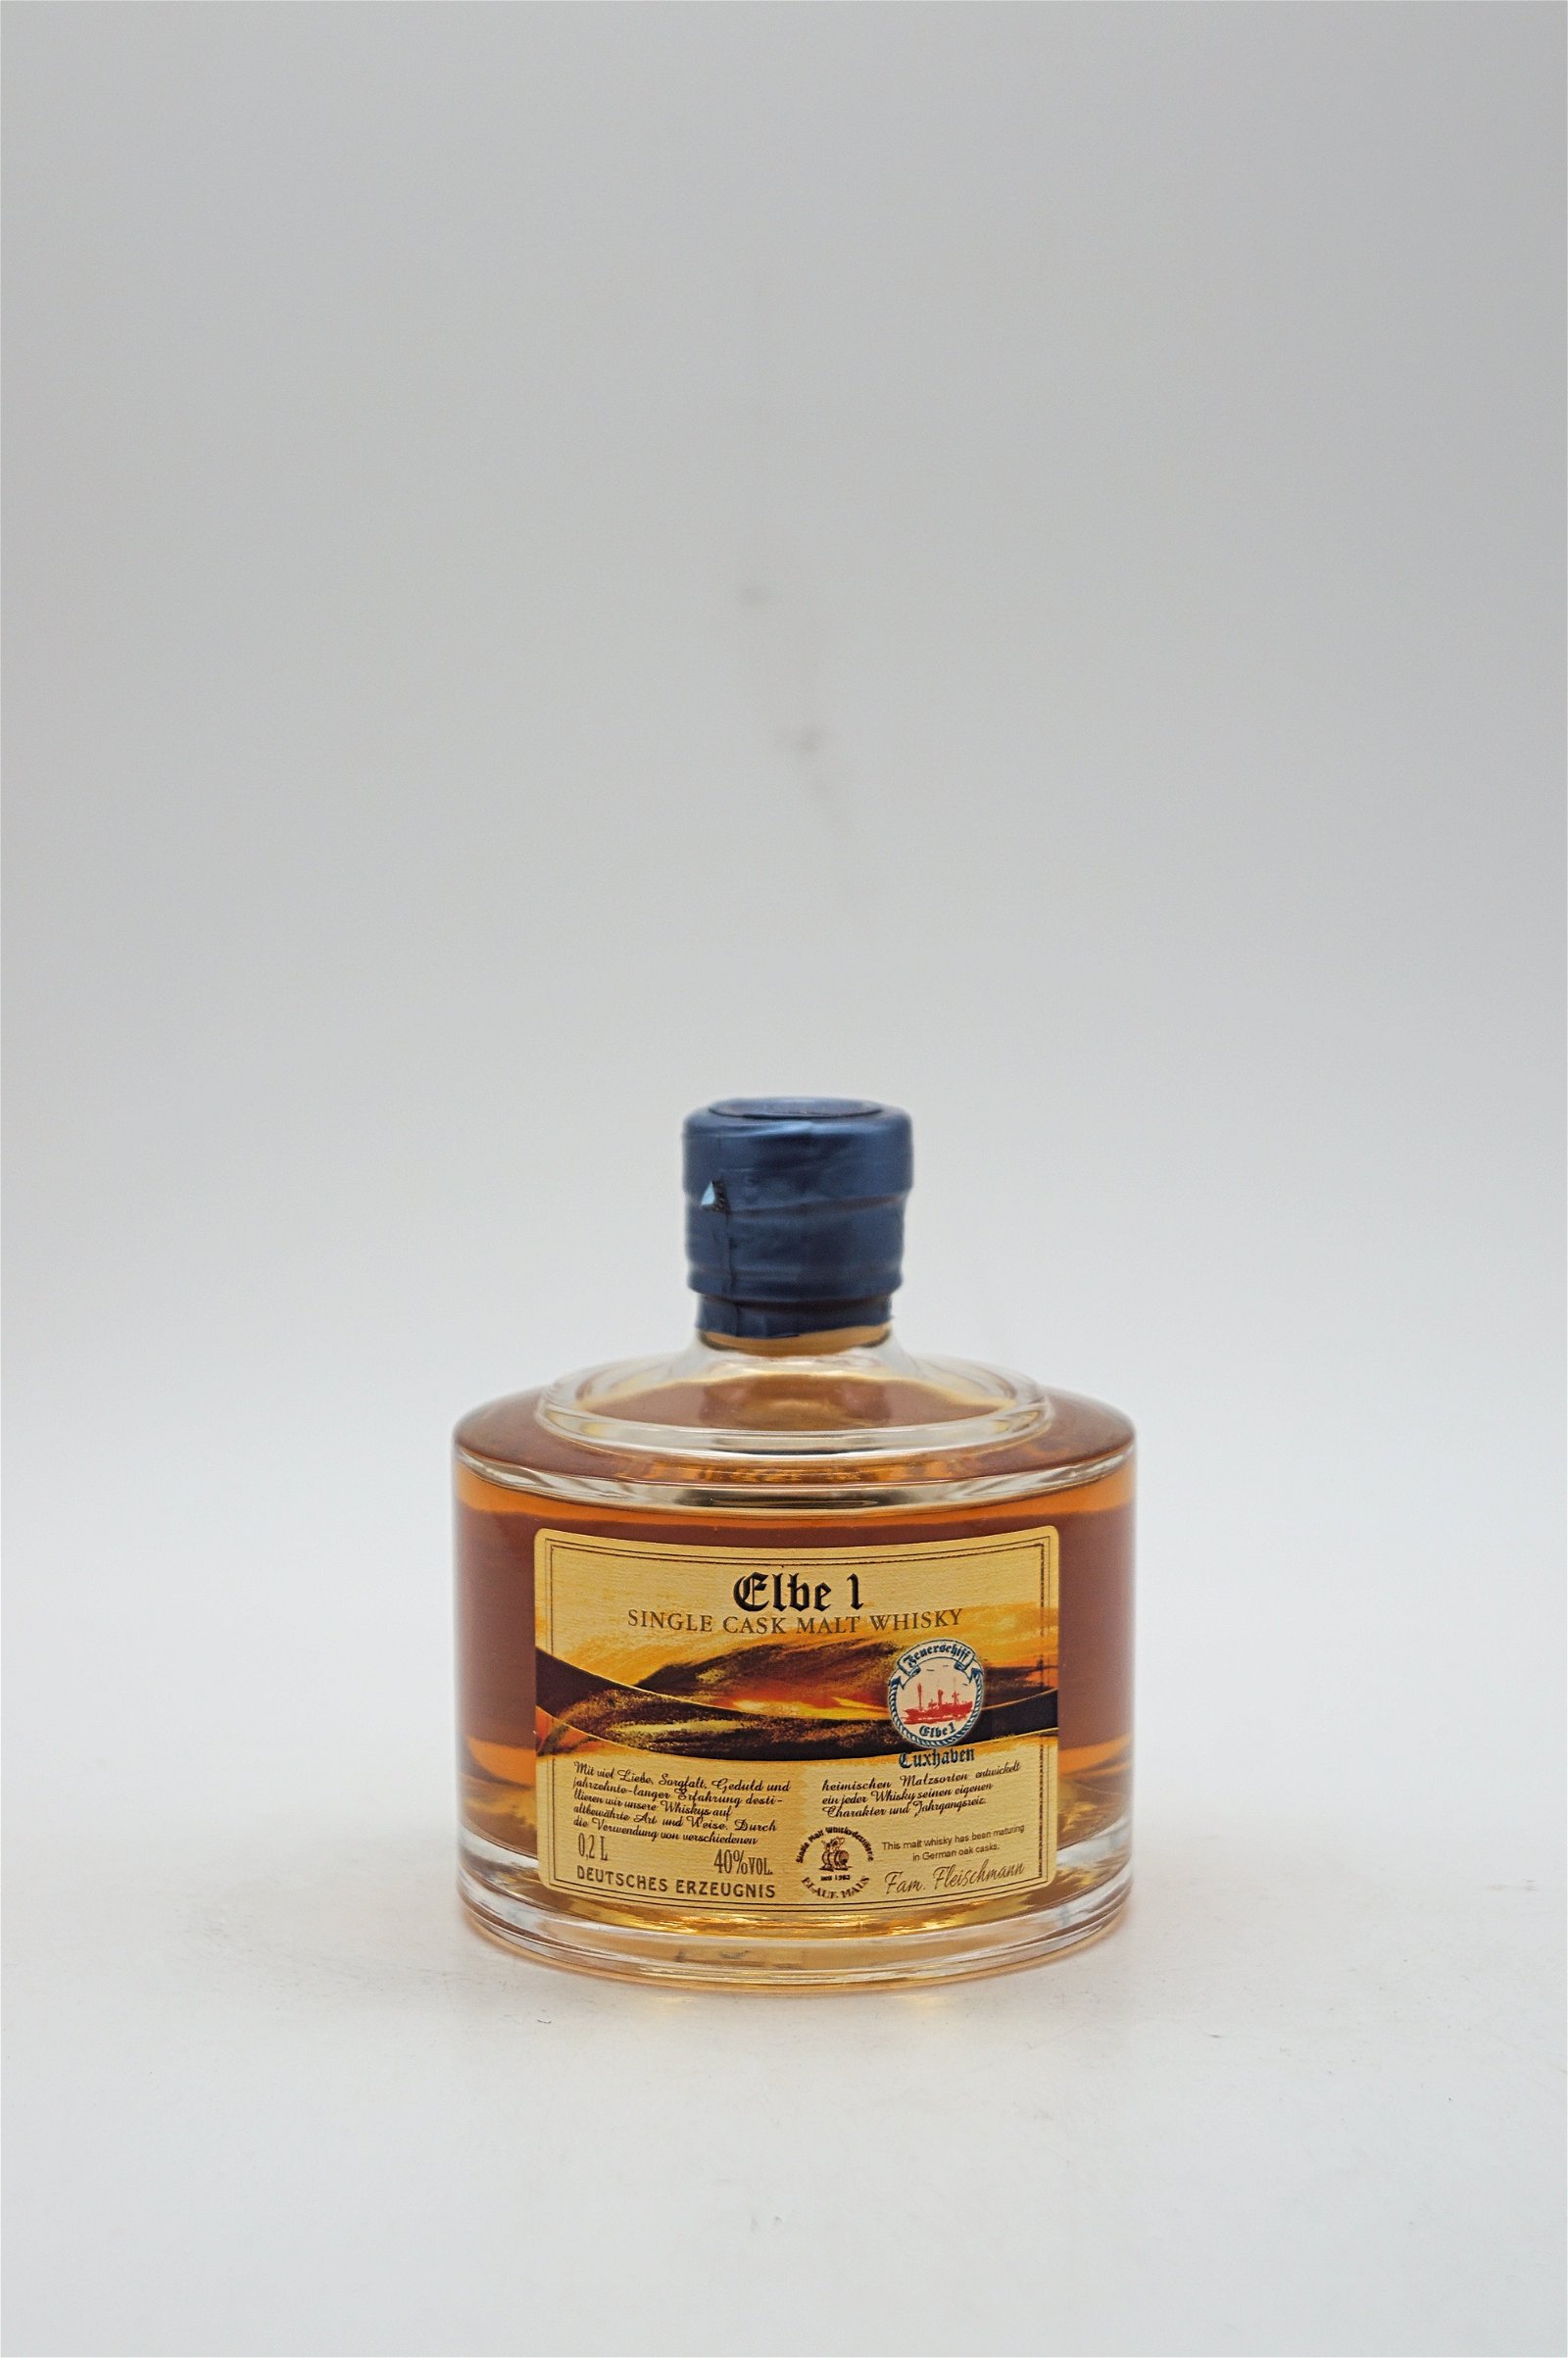 Blaue Maus Elbe 1 Single Cask Malt Whisky